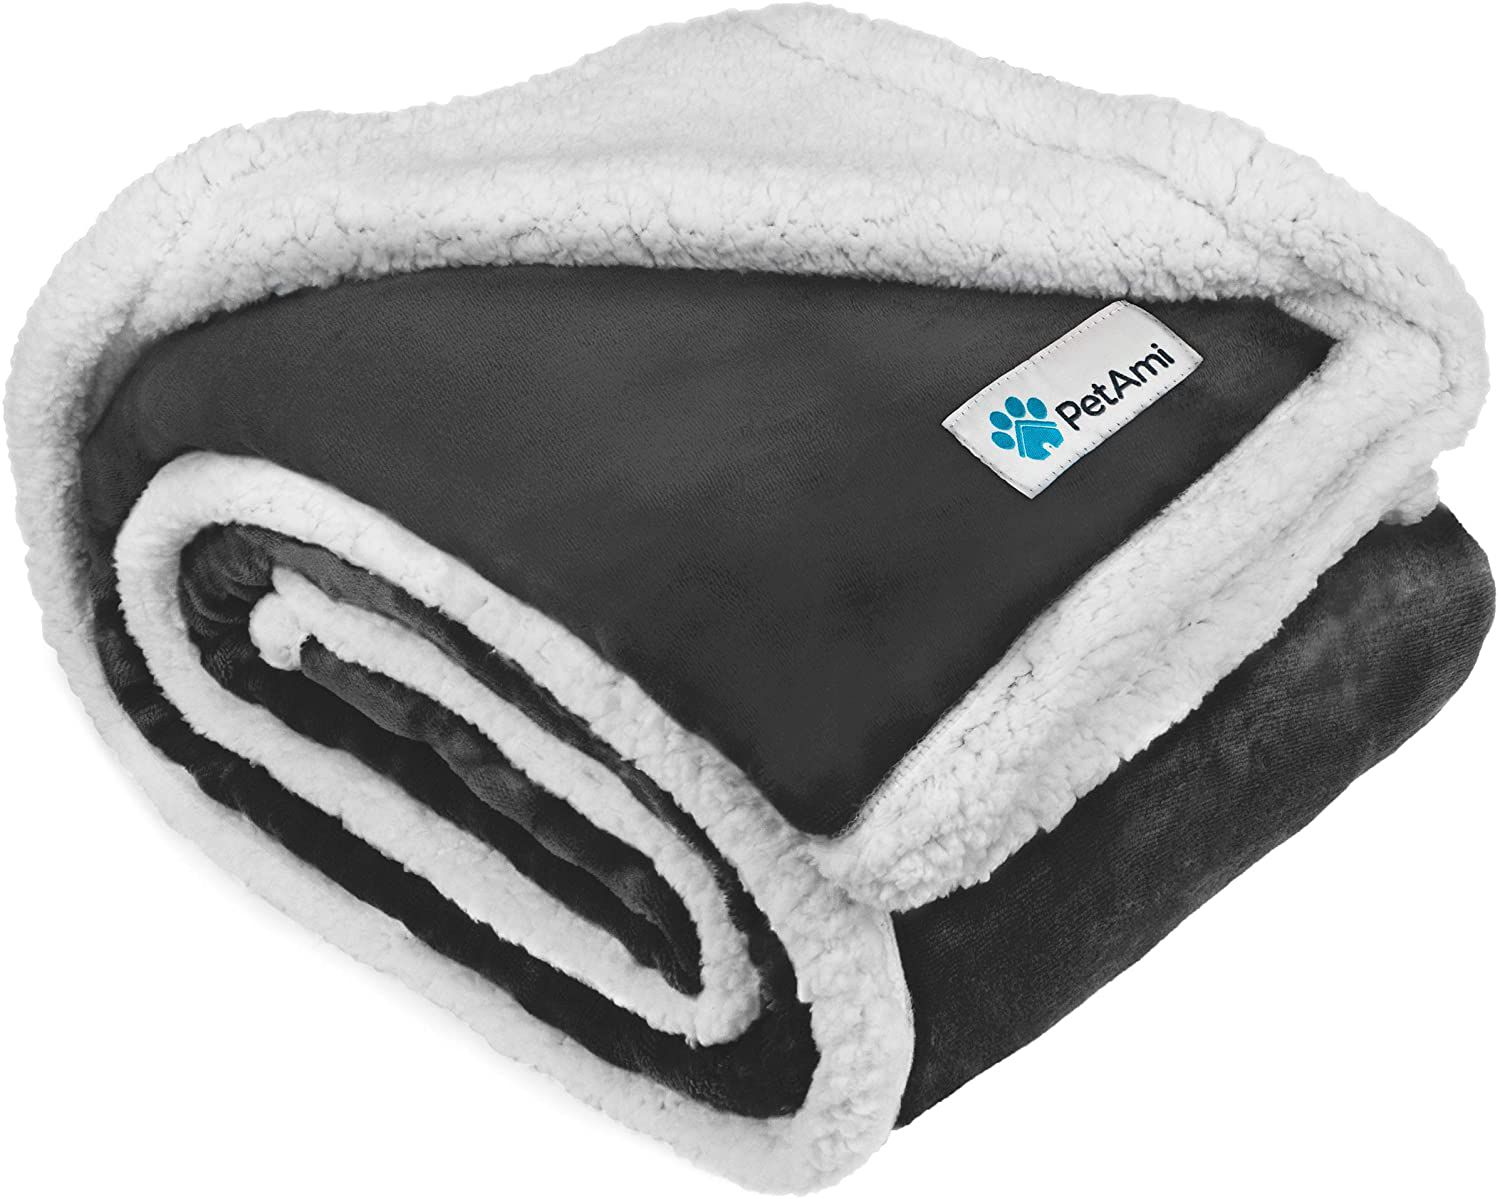 Waterproof Dog Blanket Bed Couch, Dogs, Puppies Sherpa Fleece Pet Blanket Furniture Protector